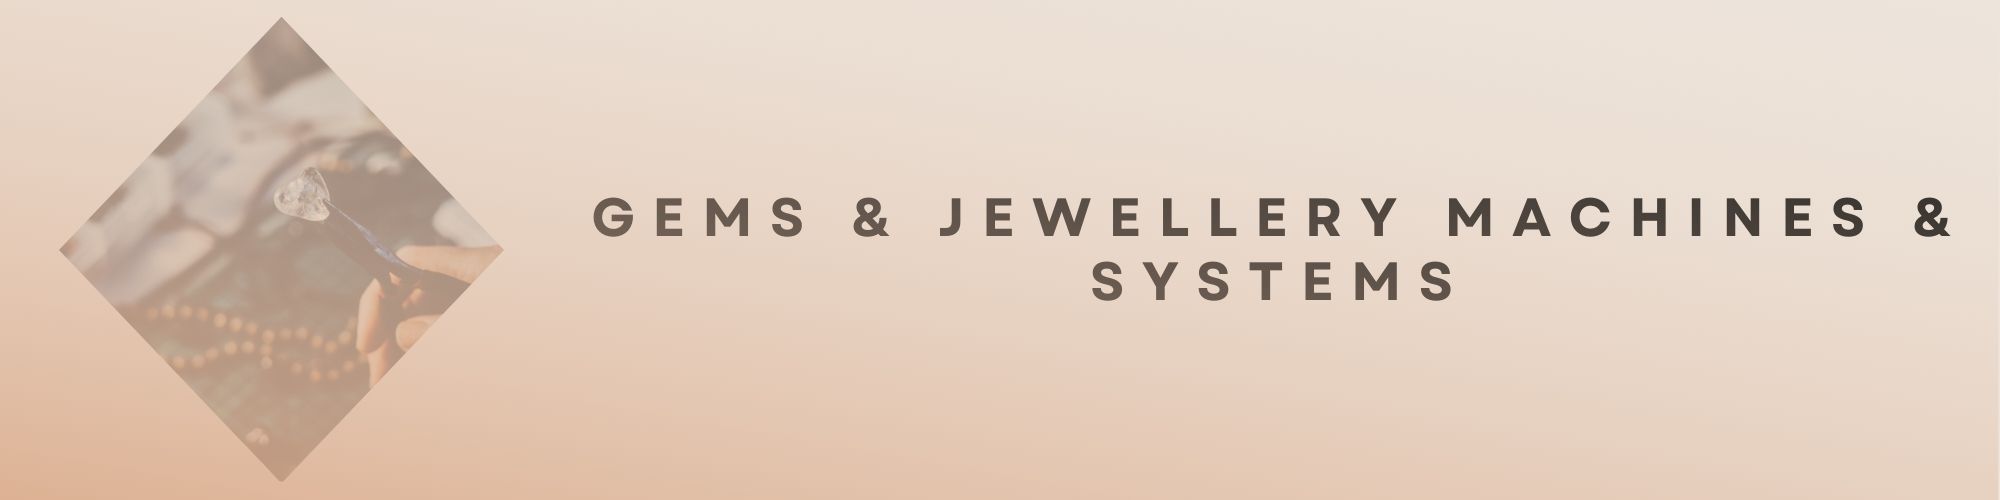 GEMS & JEWELLERY MACHINES & SYSTEMS